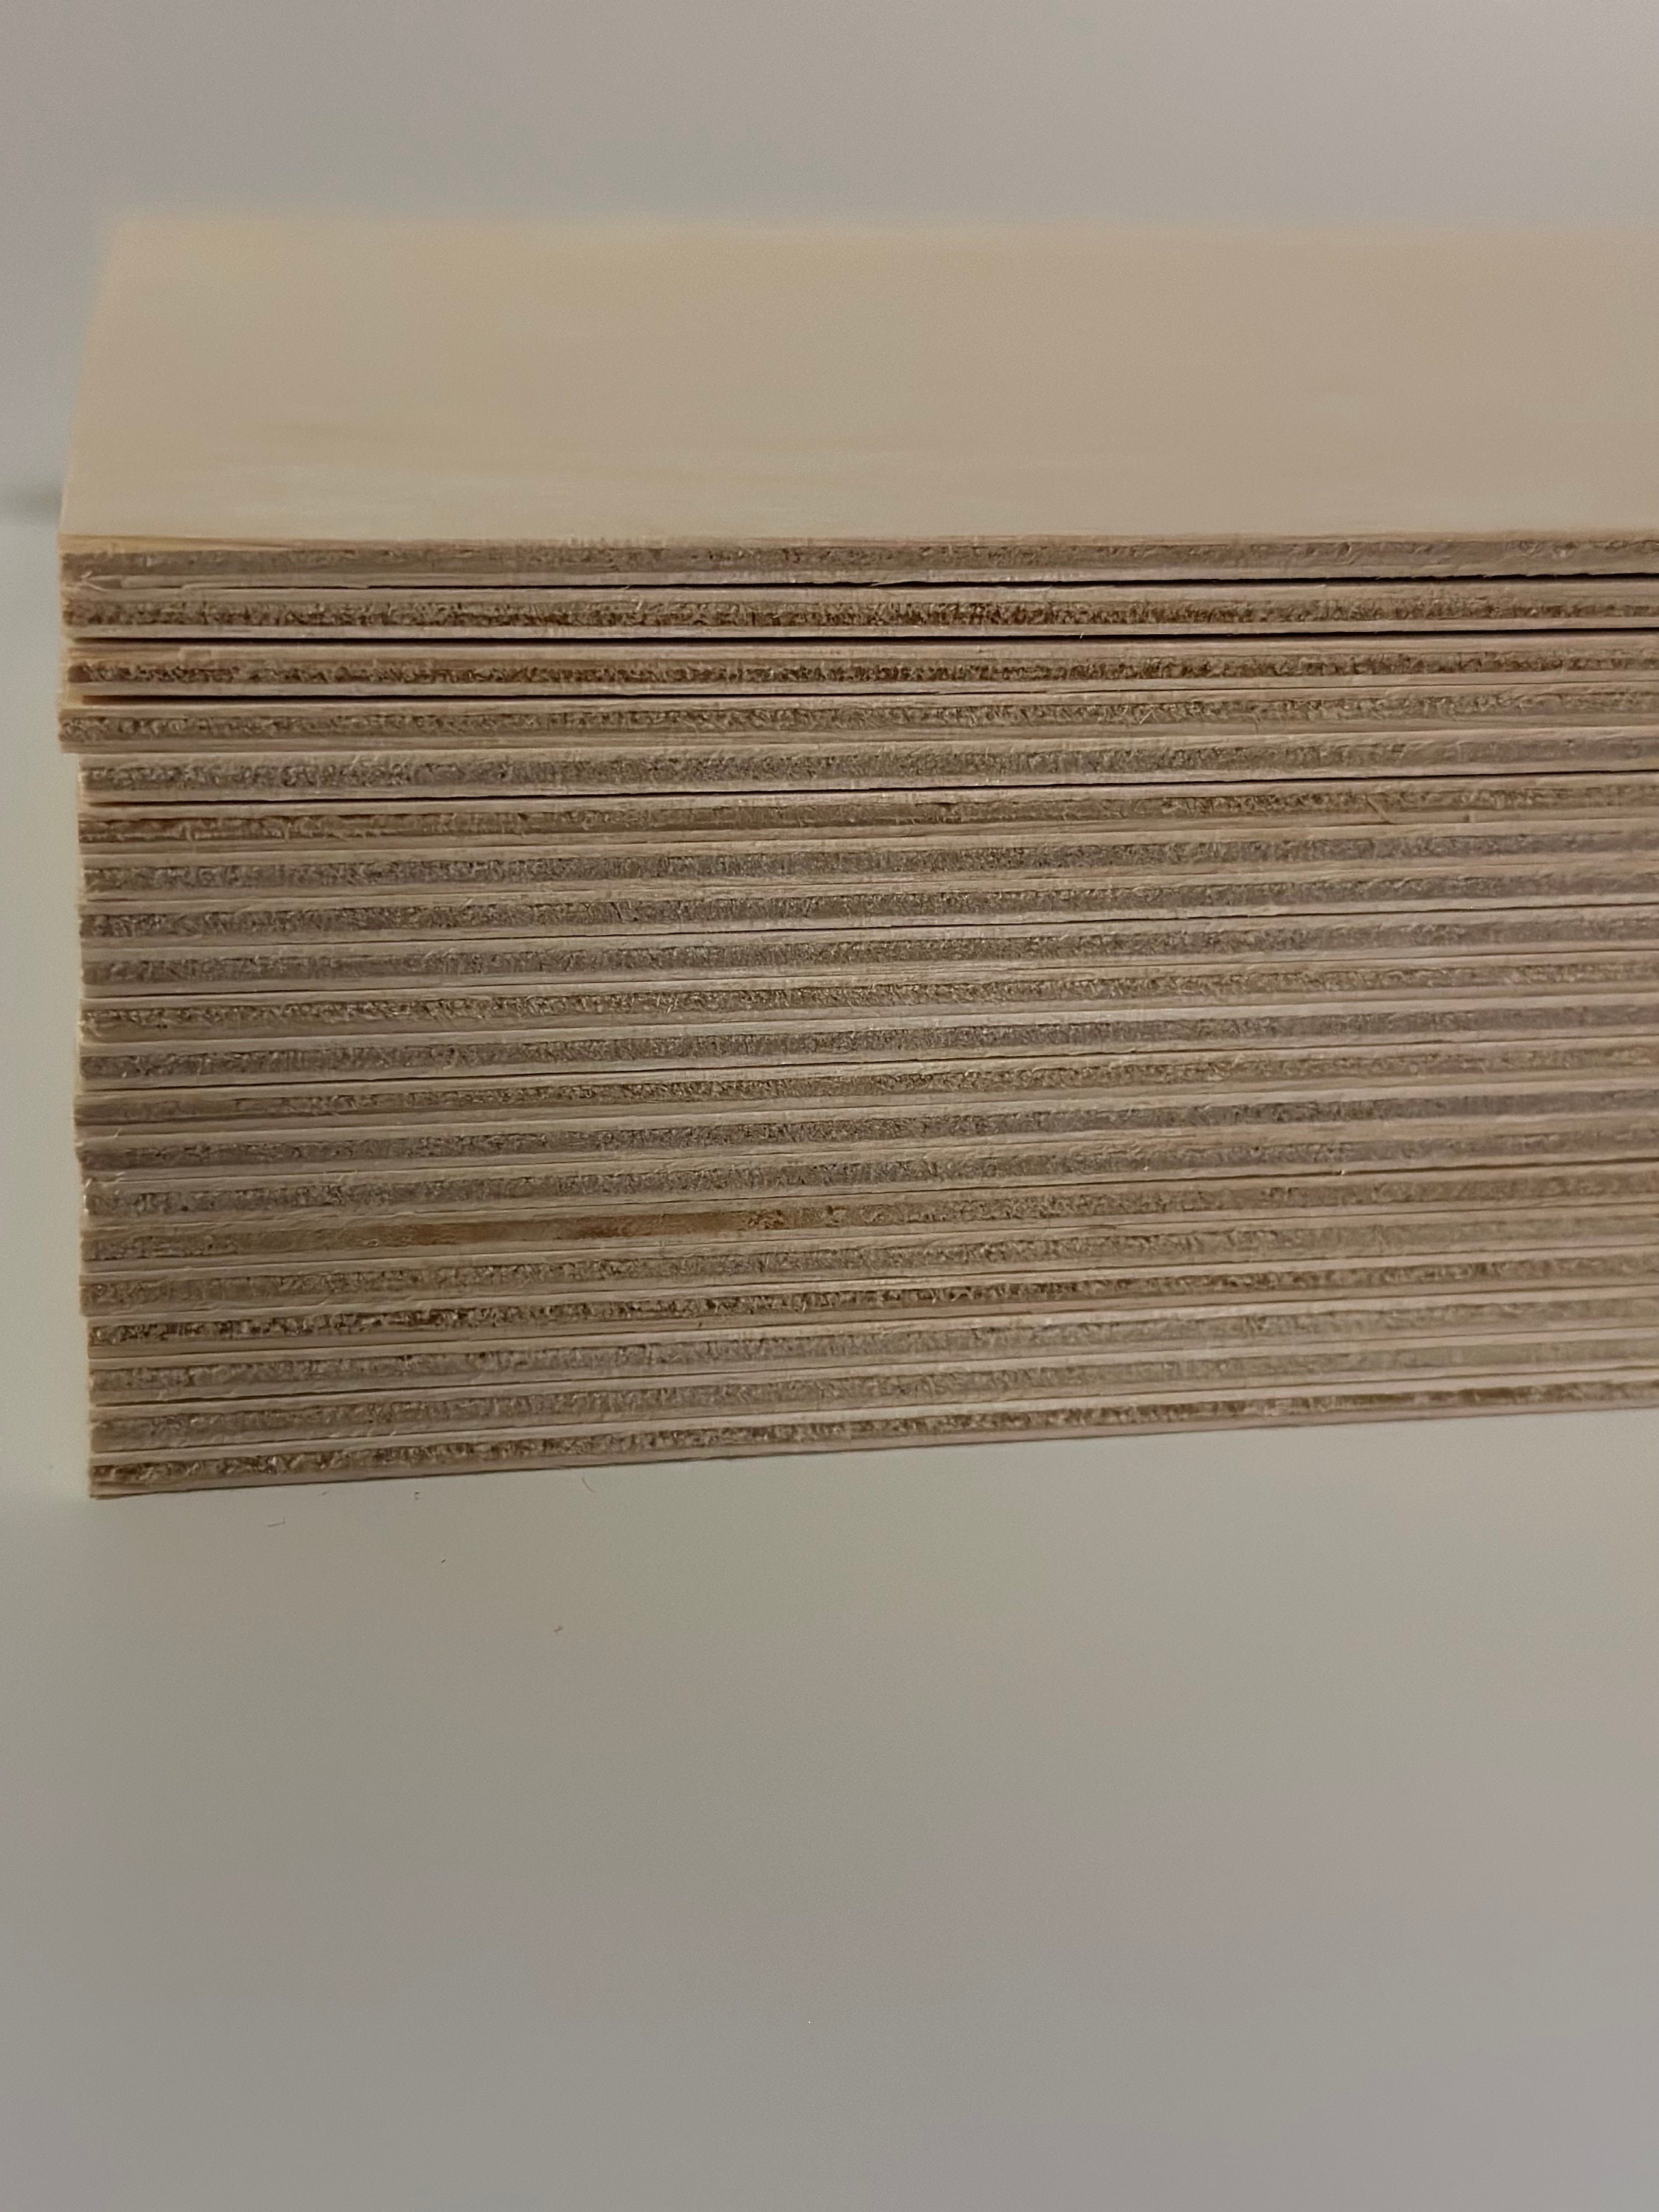 1/8 Walnut Plywood Sheets Perfect for Glowforge/laser Cutting 